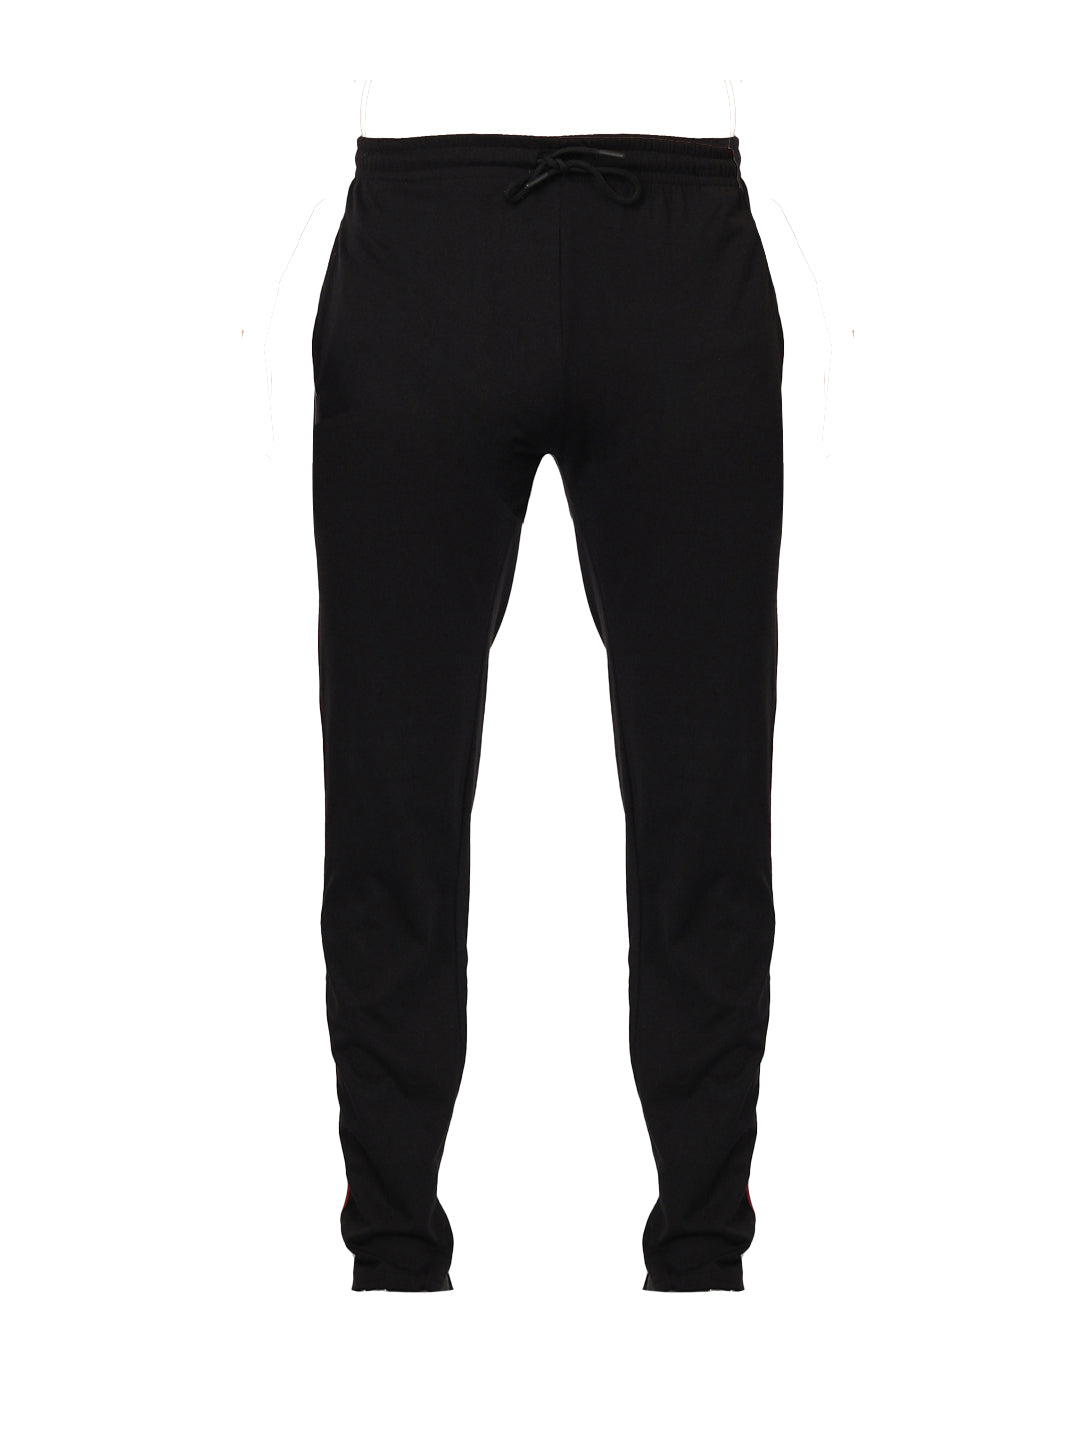 Buy Men Black Printed Polyester Regular Fit Track Pants From Fancode Shop.